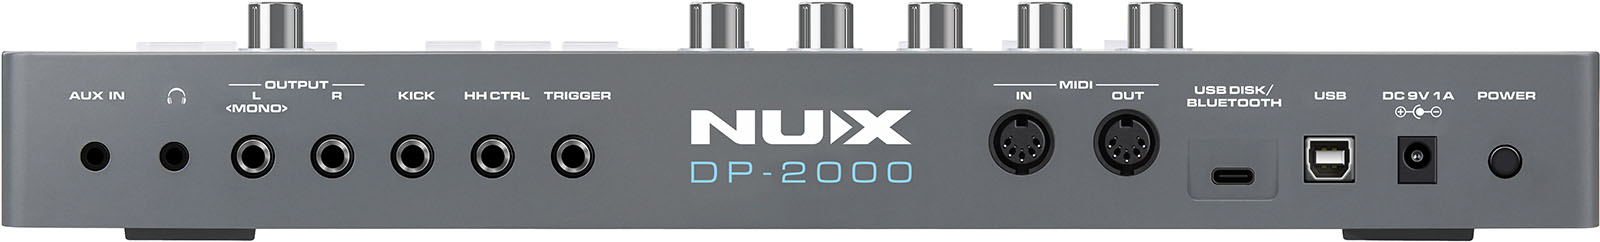 Nux Dp-2000 Multi Pad - Electronic drum mutlipad & sampling pad - Variation 1